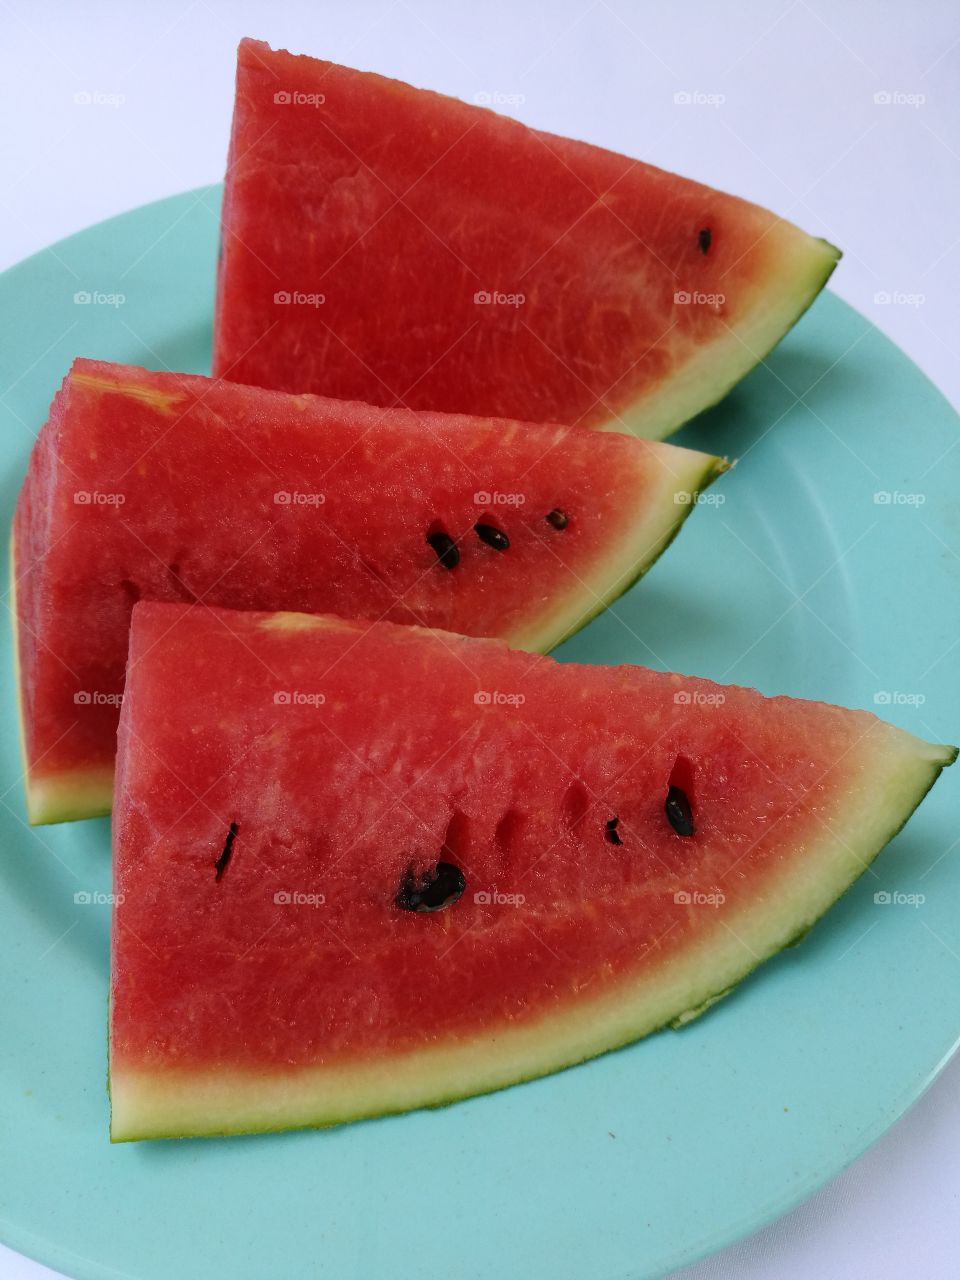 Three  pieces of watermelon